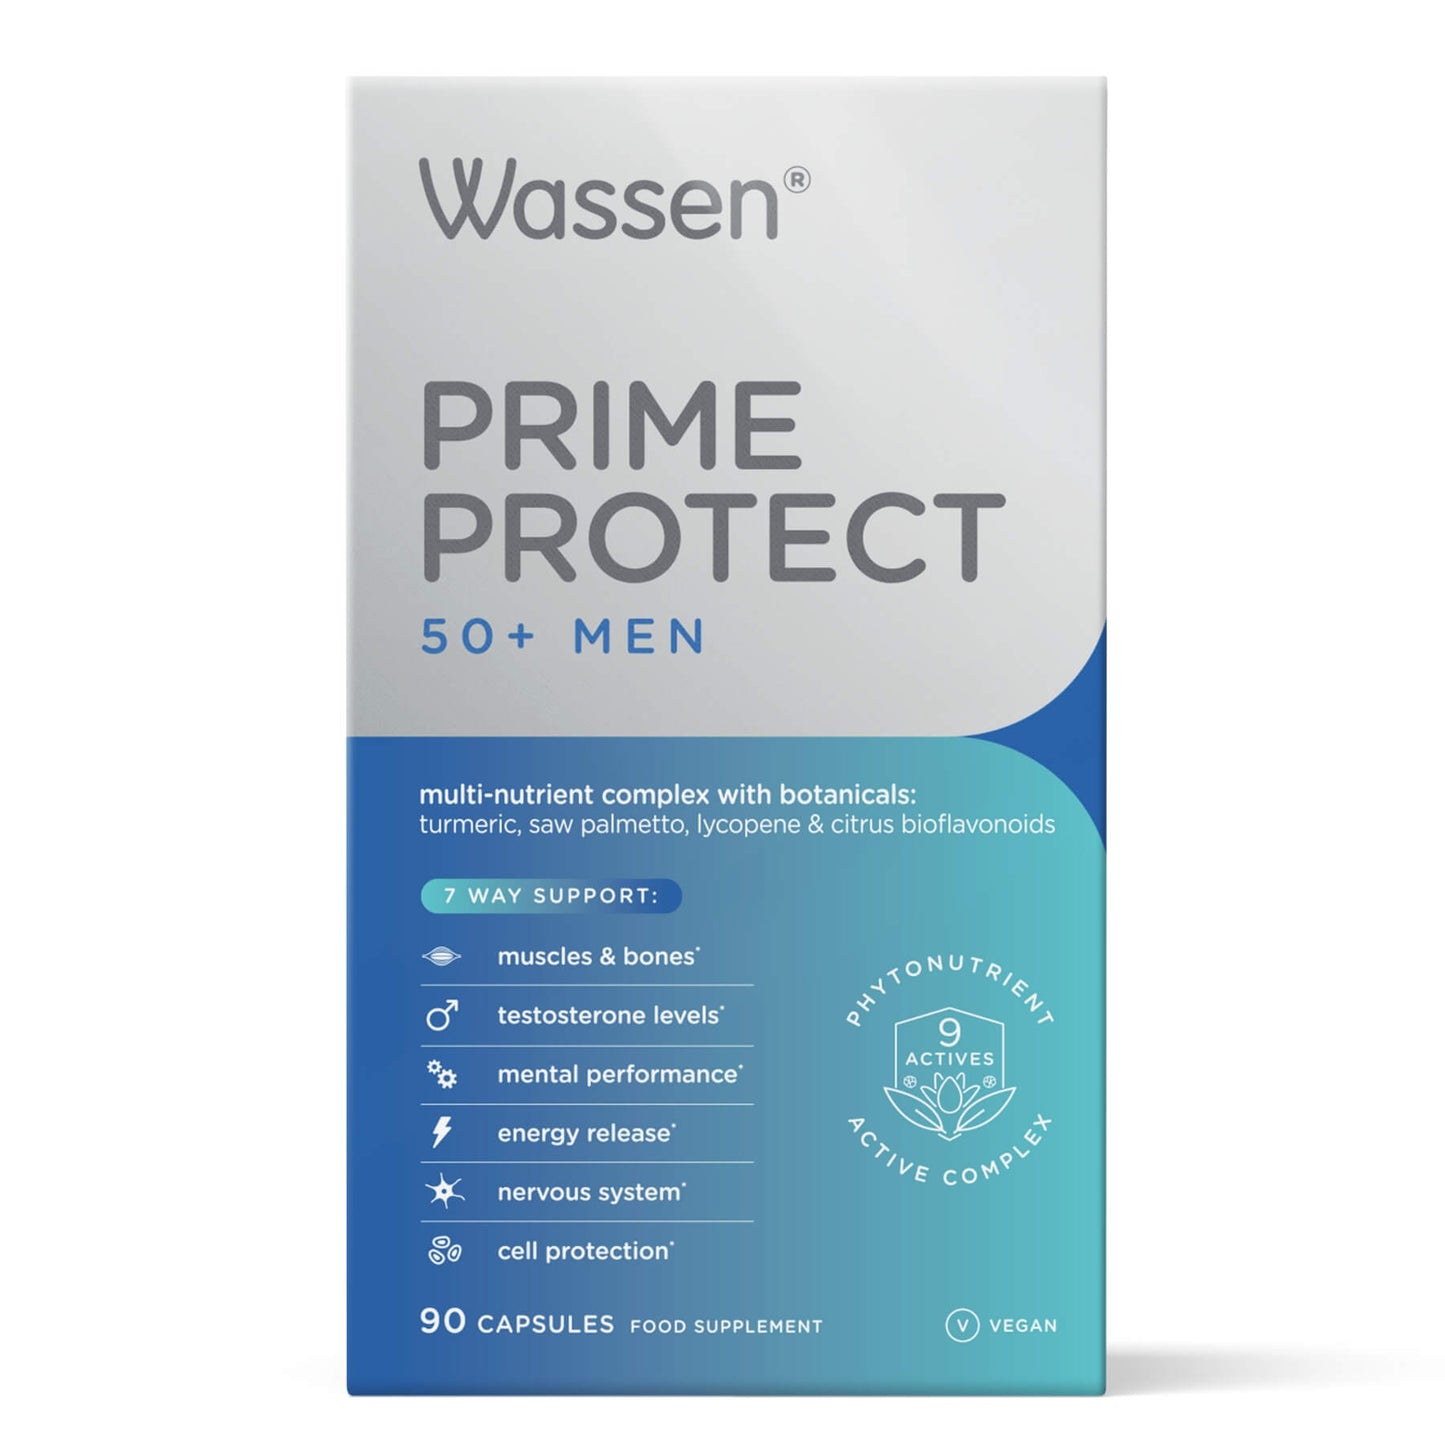 Prime Protect 50+ Men